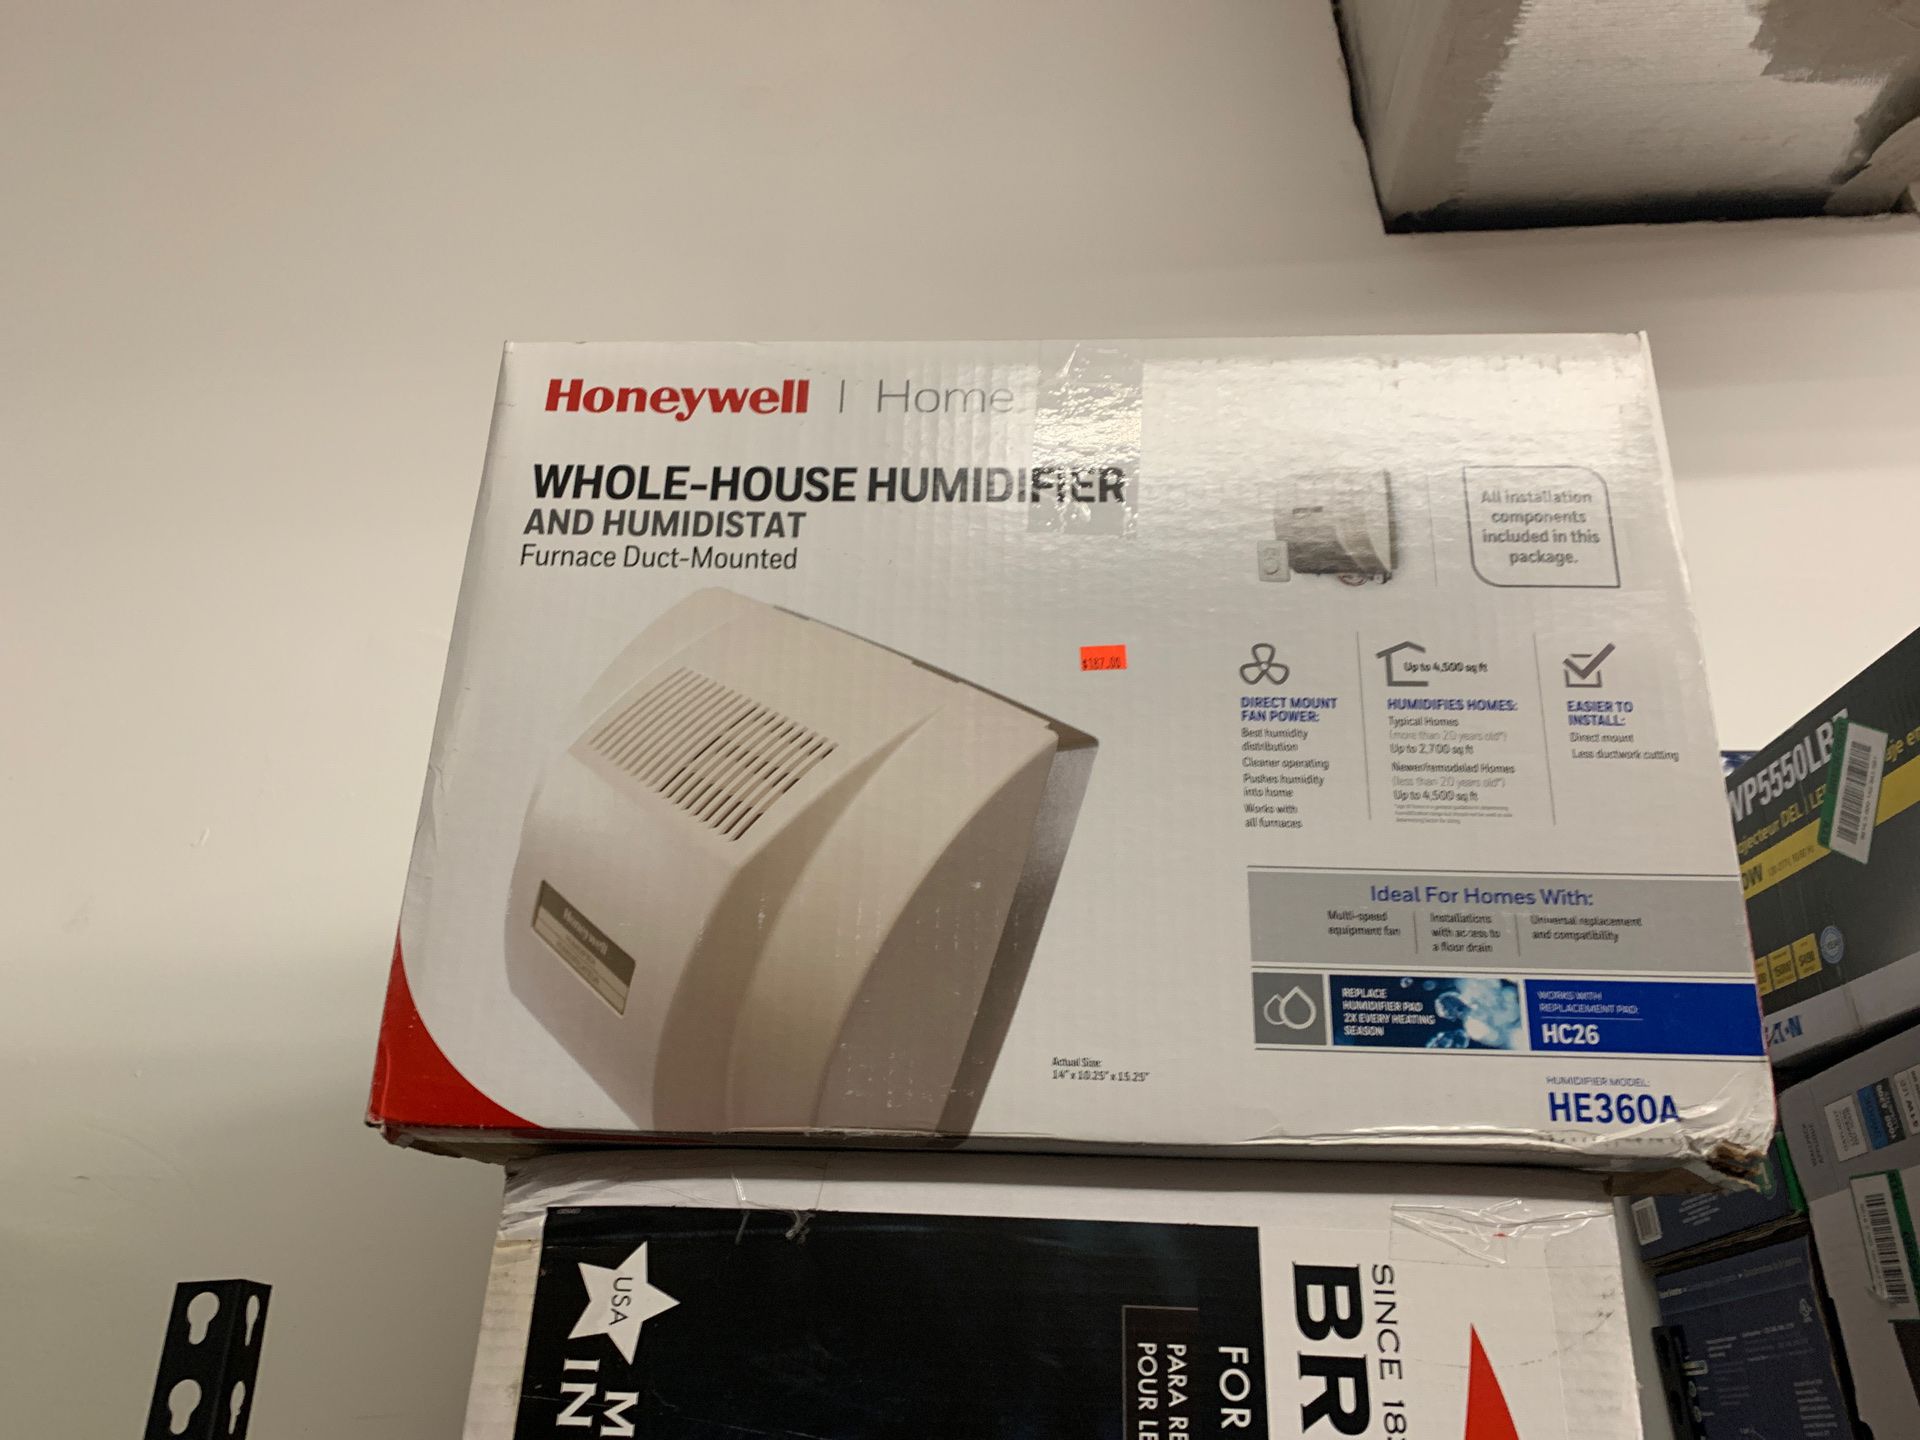 Whole house humidifier and humidistat